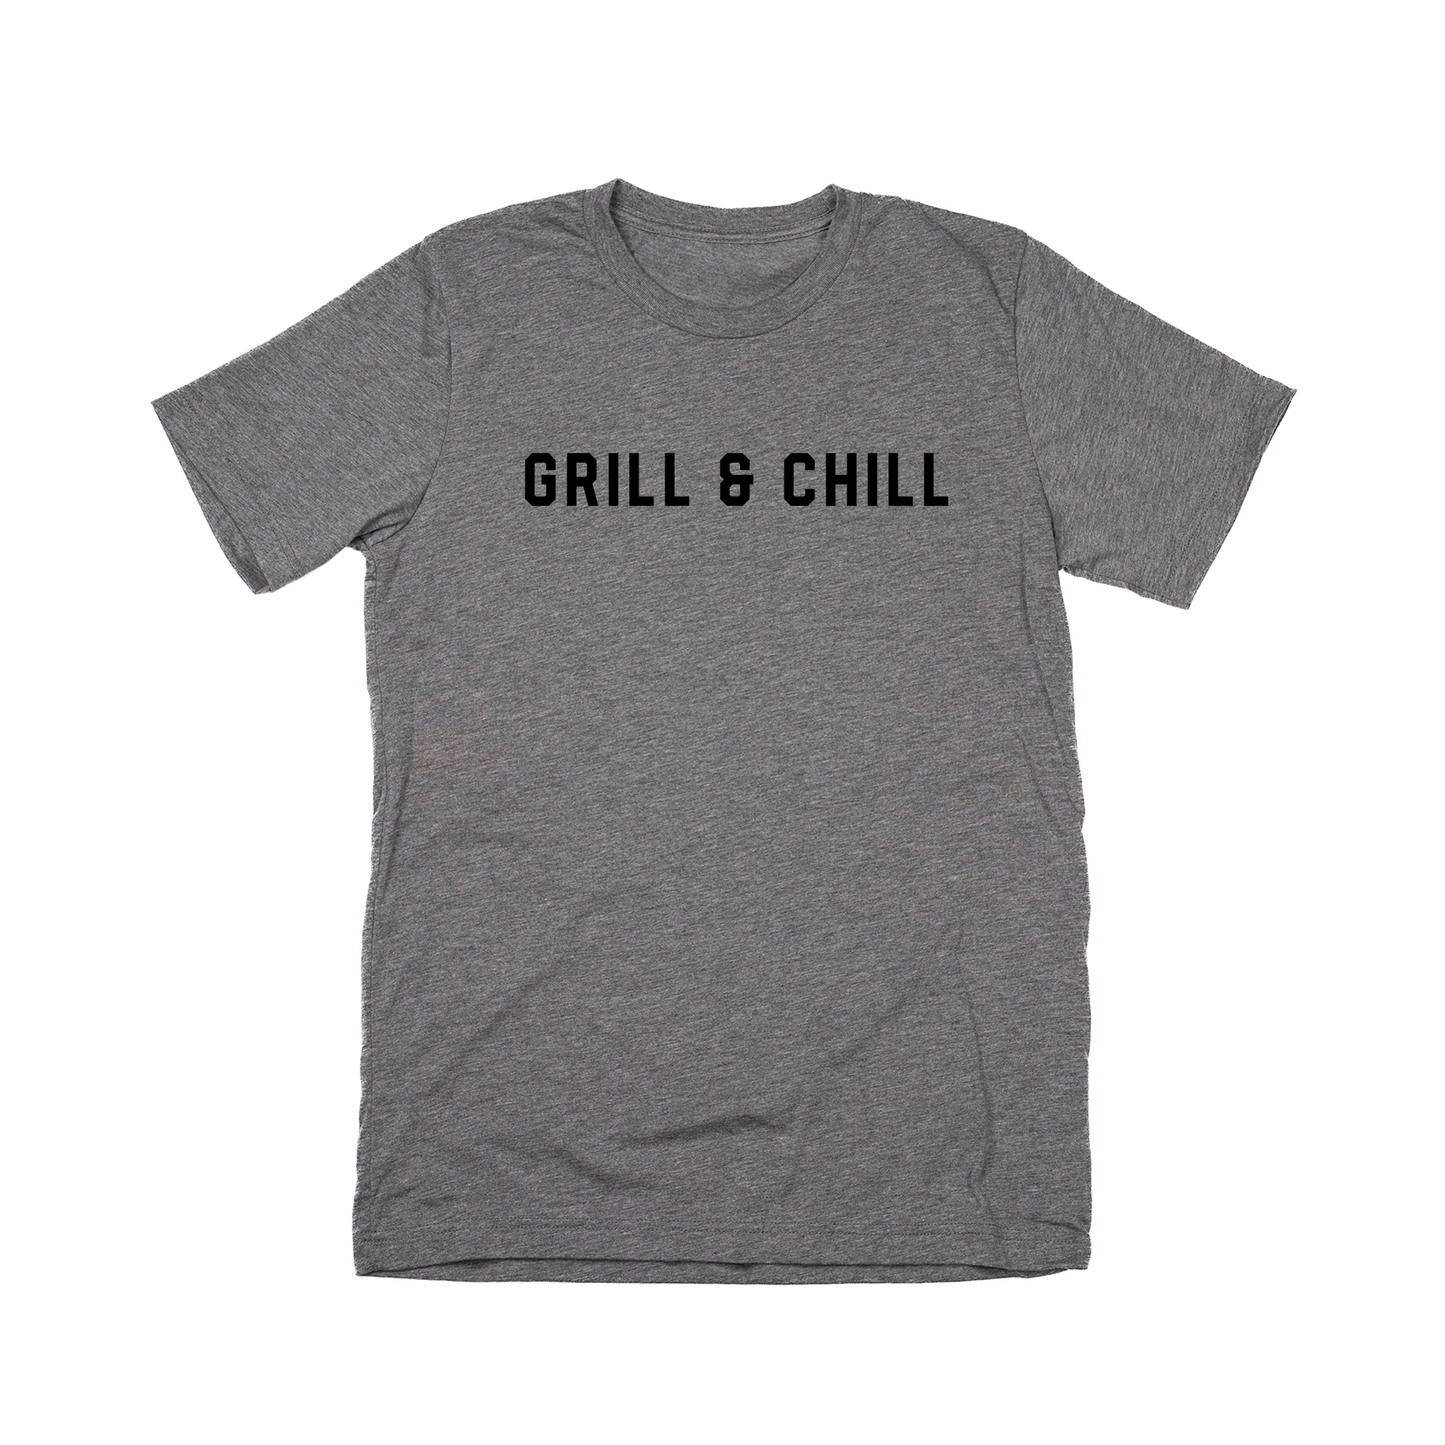 Grill & Chill (Black) - Tee (Gray)